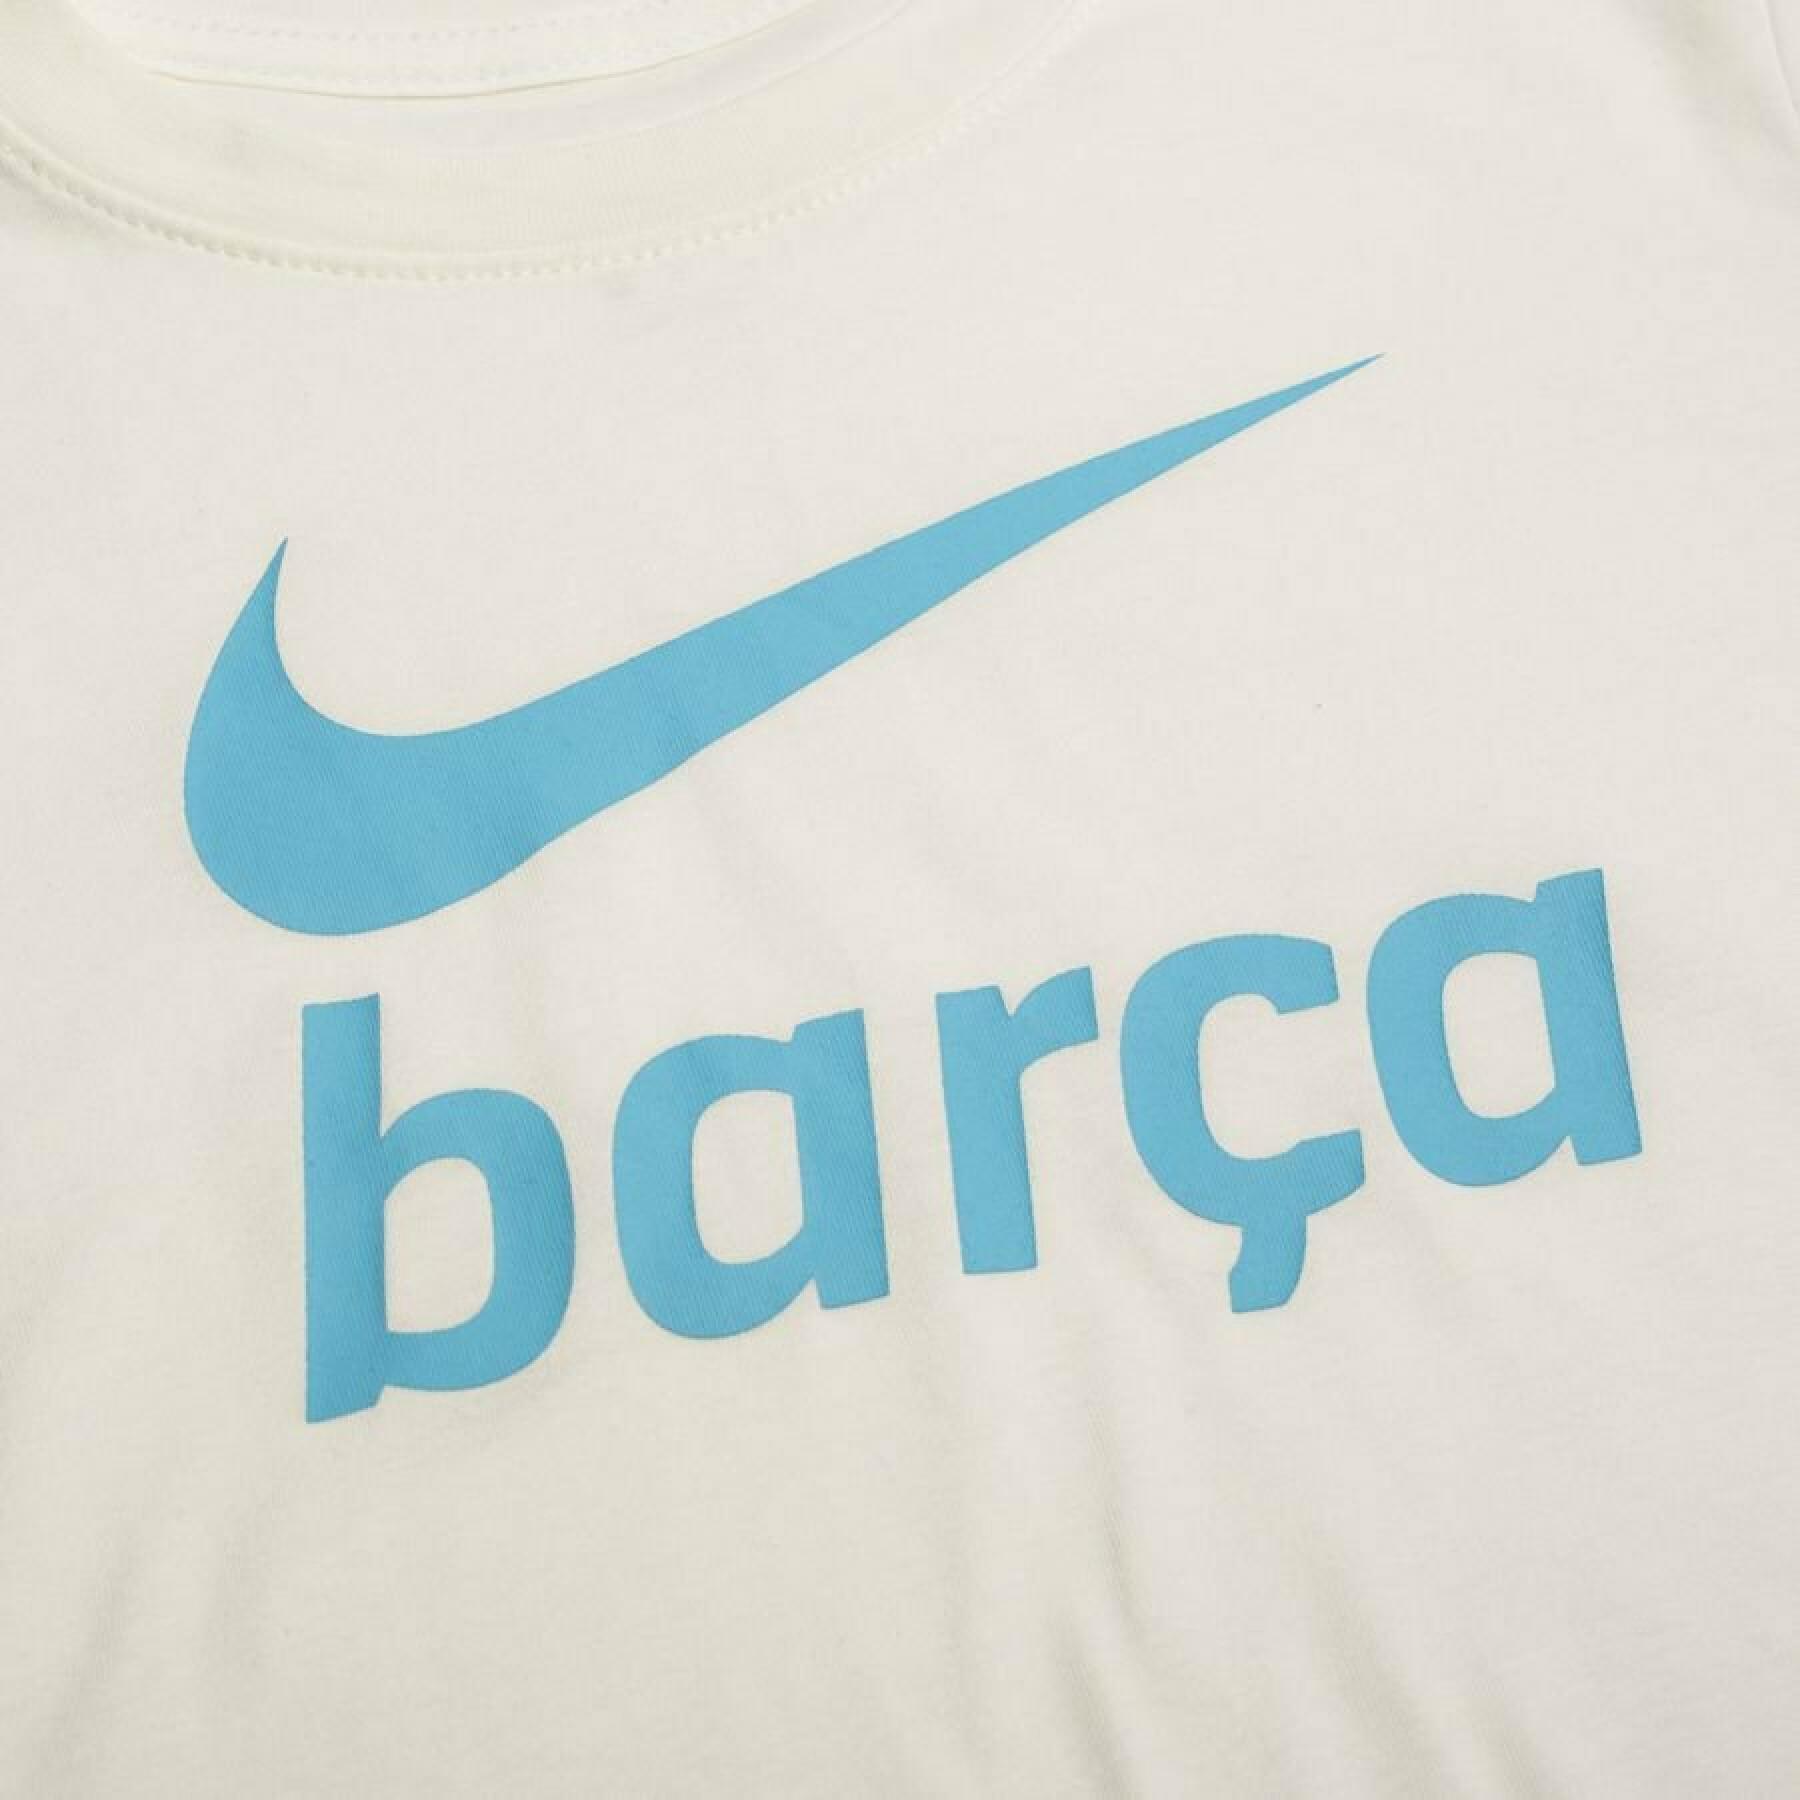 Camiseta de mujer FC Barcelone SWOOSH CLUB 2021/22